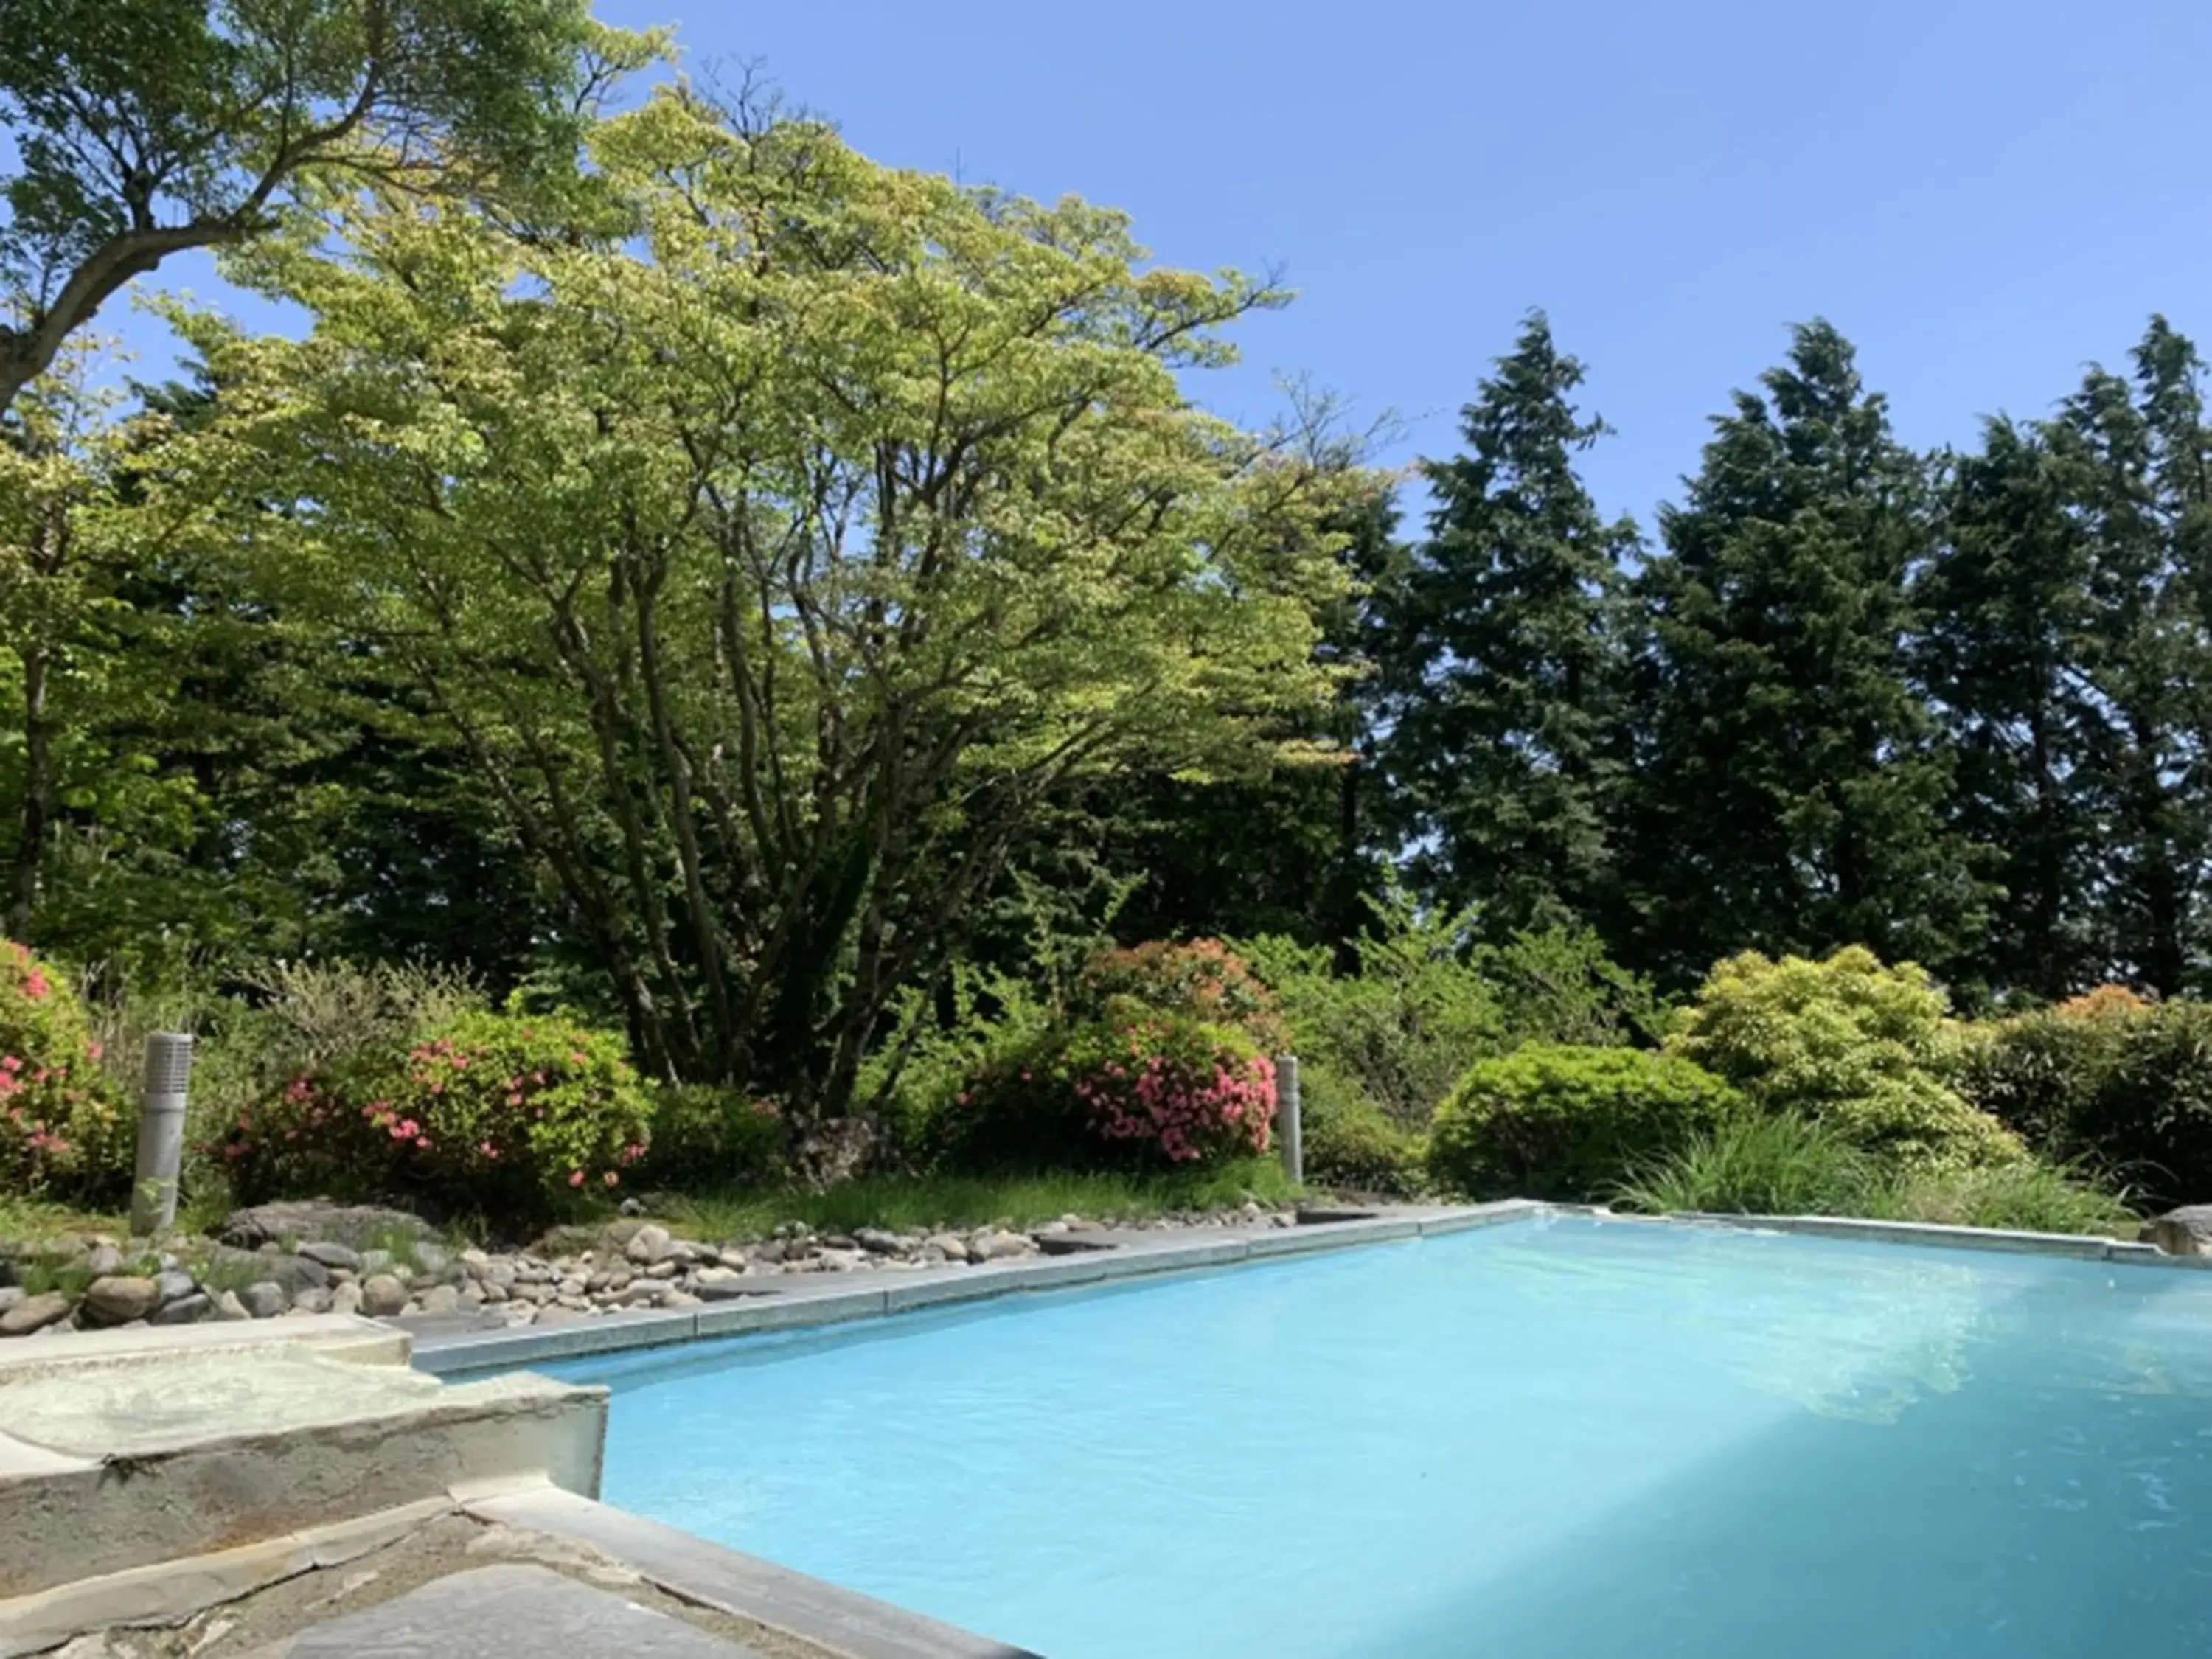 Hot Spring Bath, Swimming Pool in Hakone Yunohana Prince Hotel